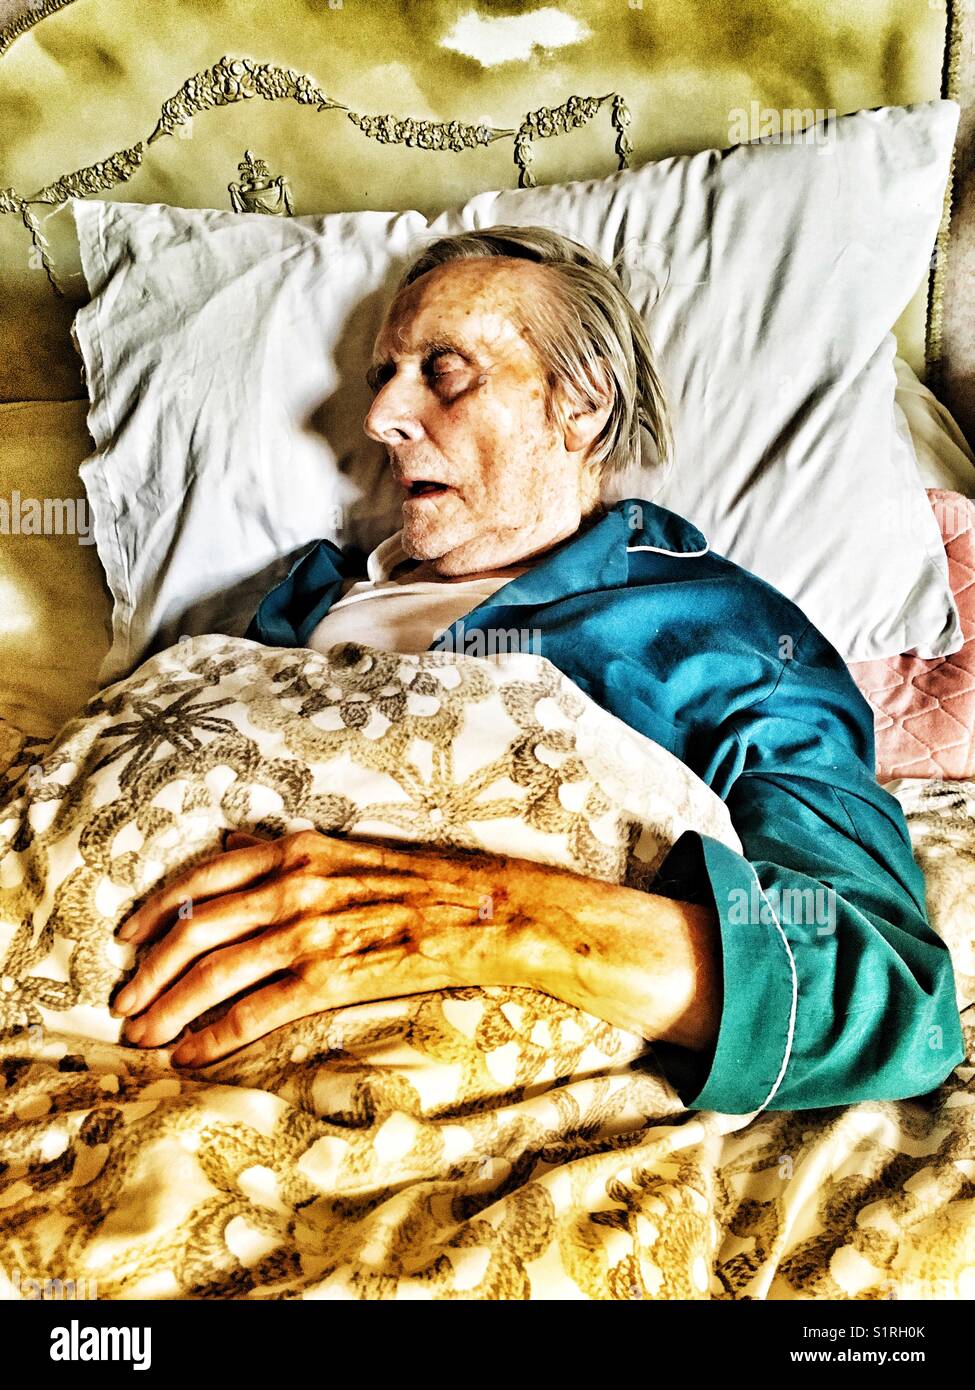 Elderly man asleep in bed Stock Photo